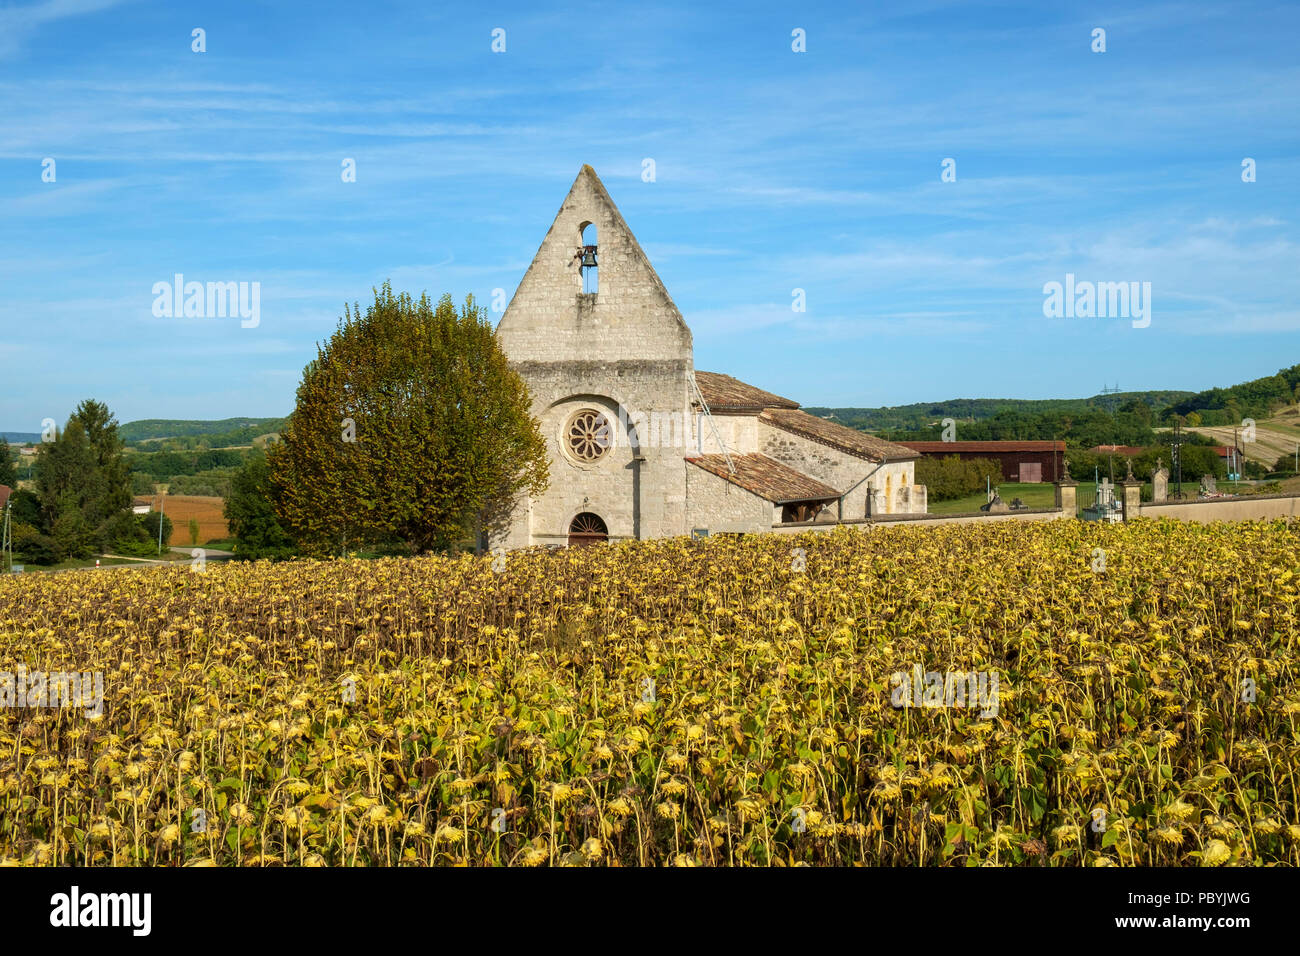 The picturesque little church in the hamlet of Lieu dit Saint Leger near Tournon d'Agenais is seen beyond a field of ripening sunflowers in rural   Lot et Garonne countryside, France Stock Photo